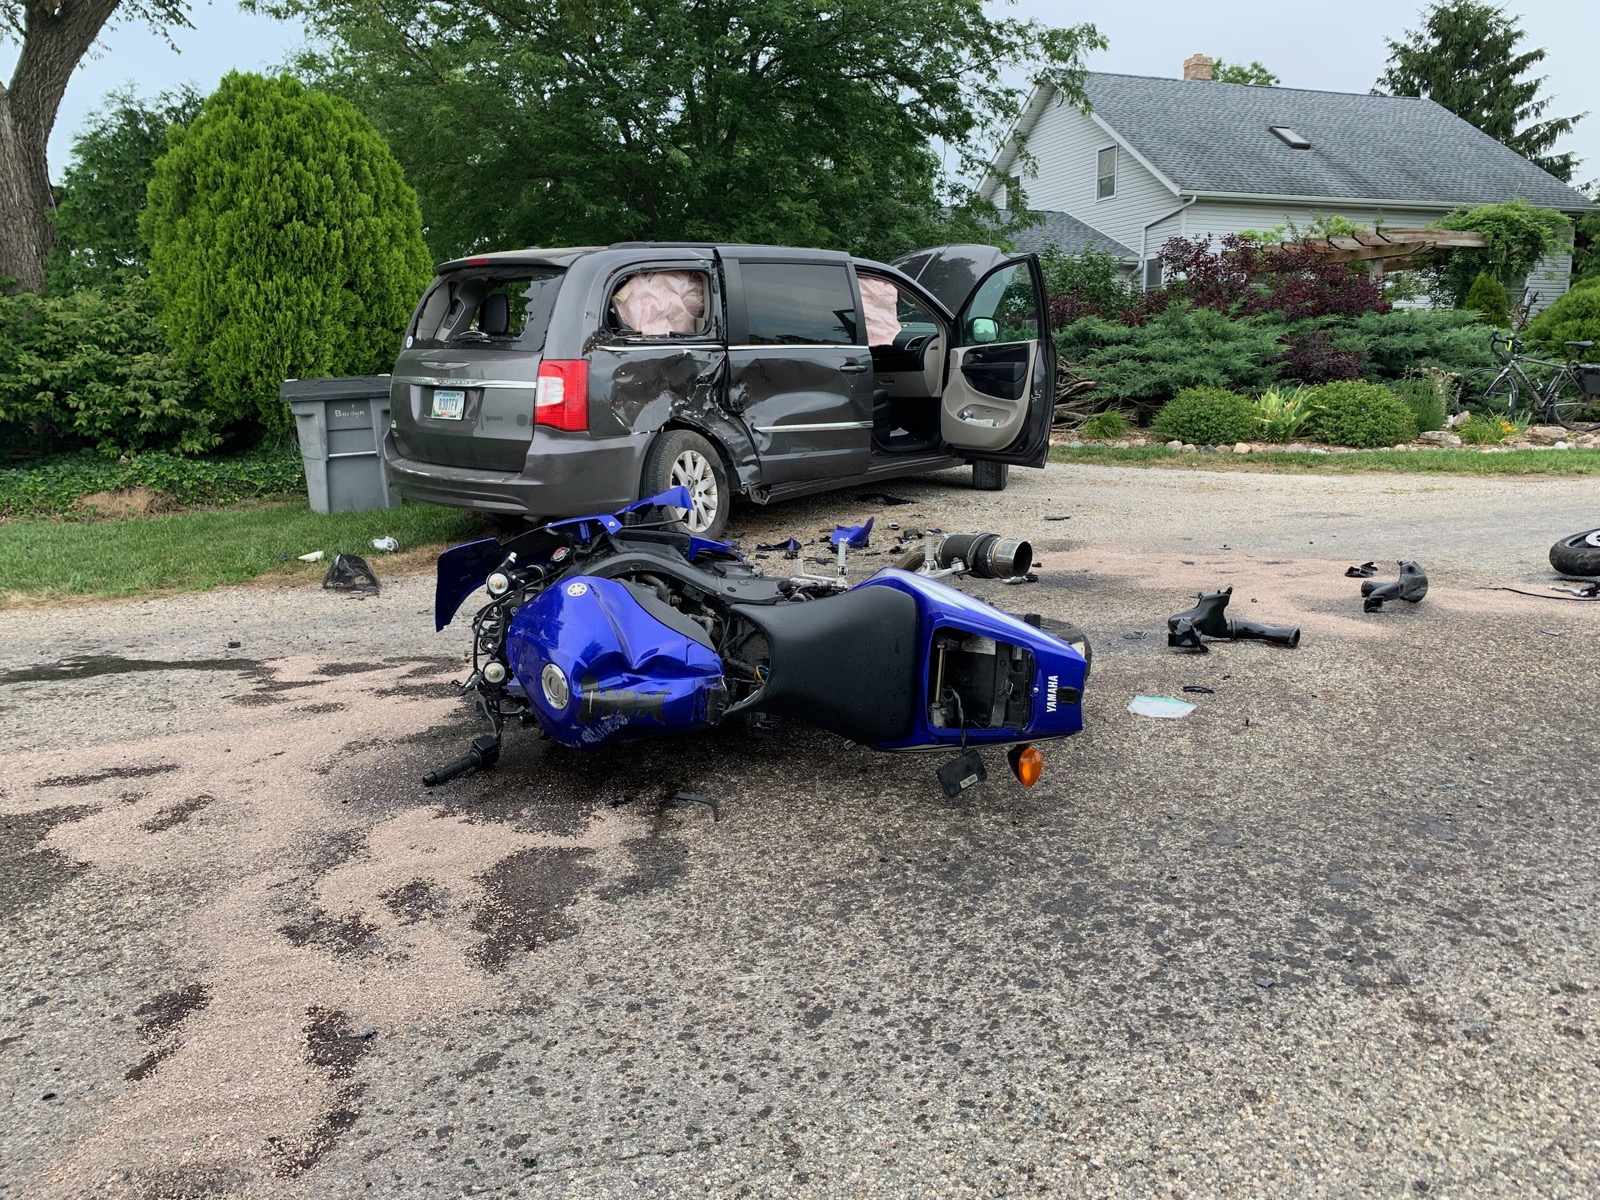 One killed in Kosciusko County motorcycle crash - WOWO 1190 AM | 107.5 FM